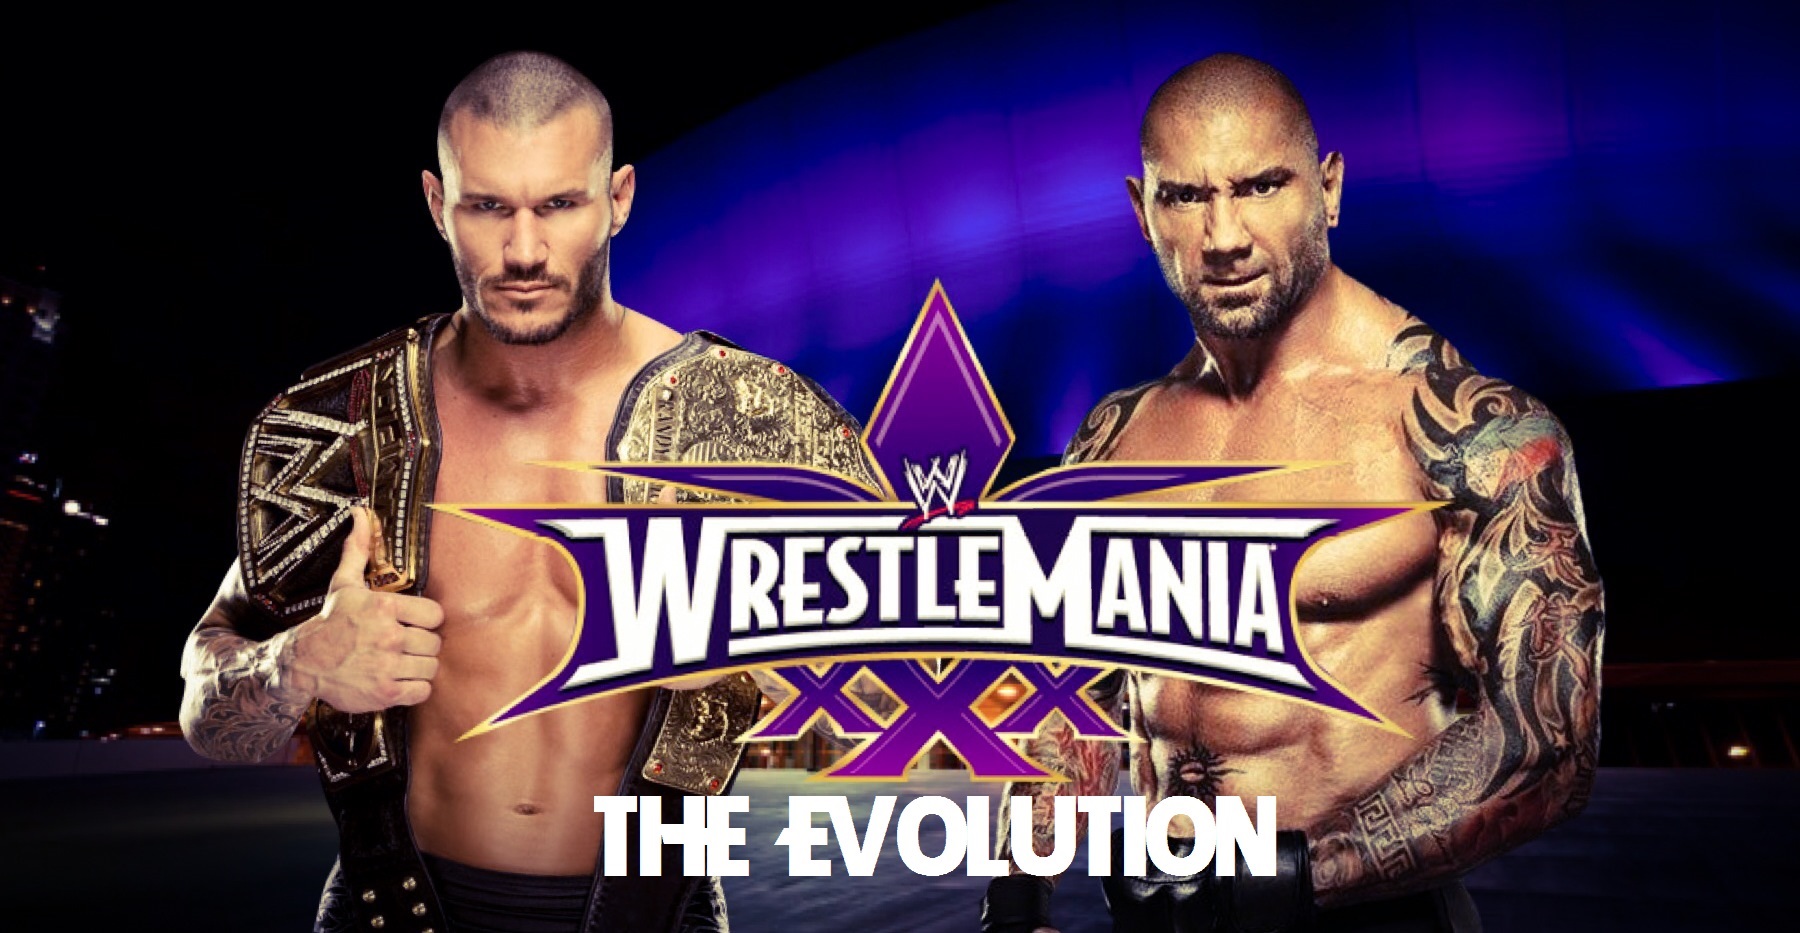 Batista vs. Orton